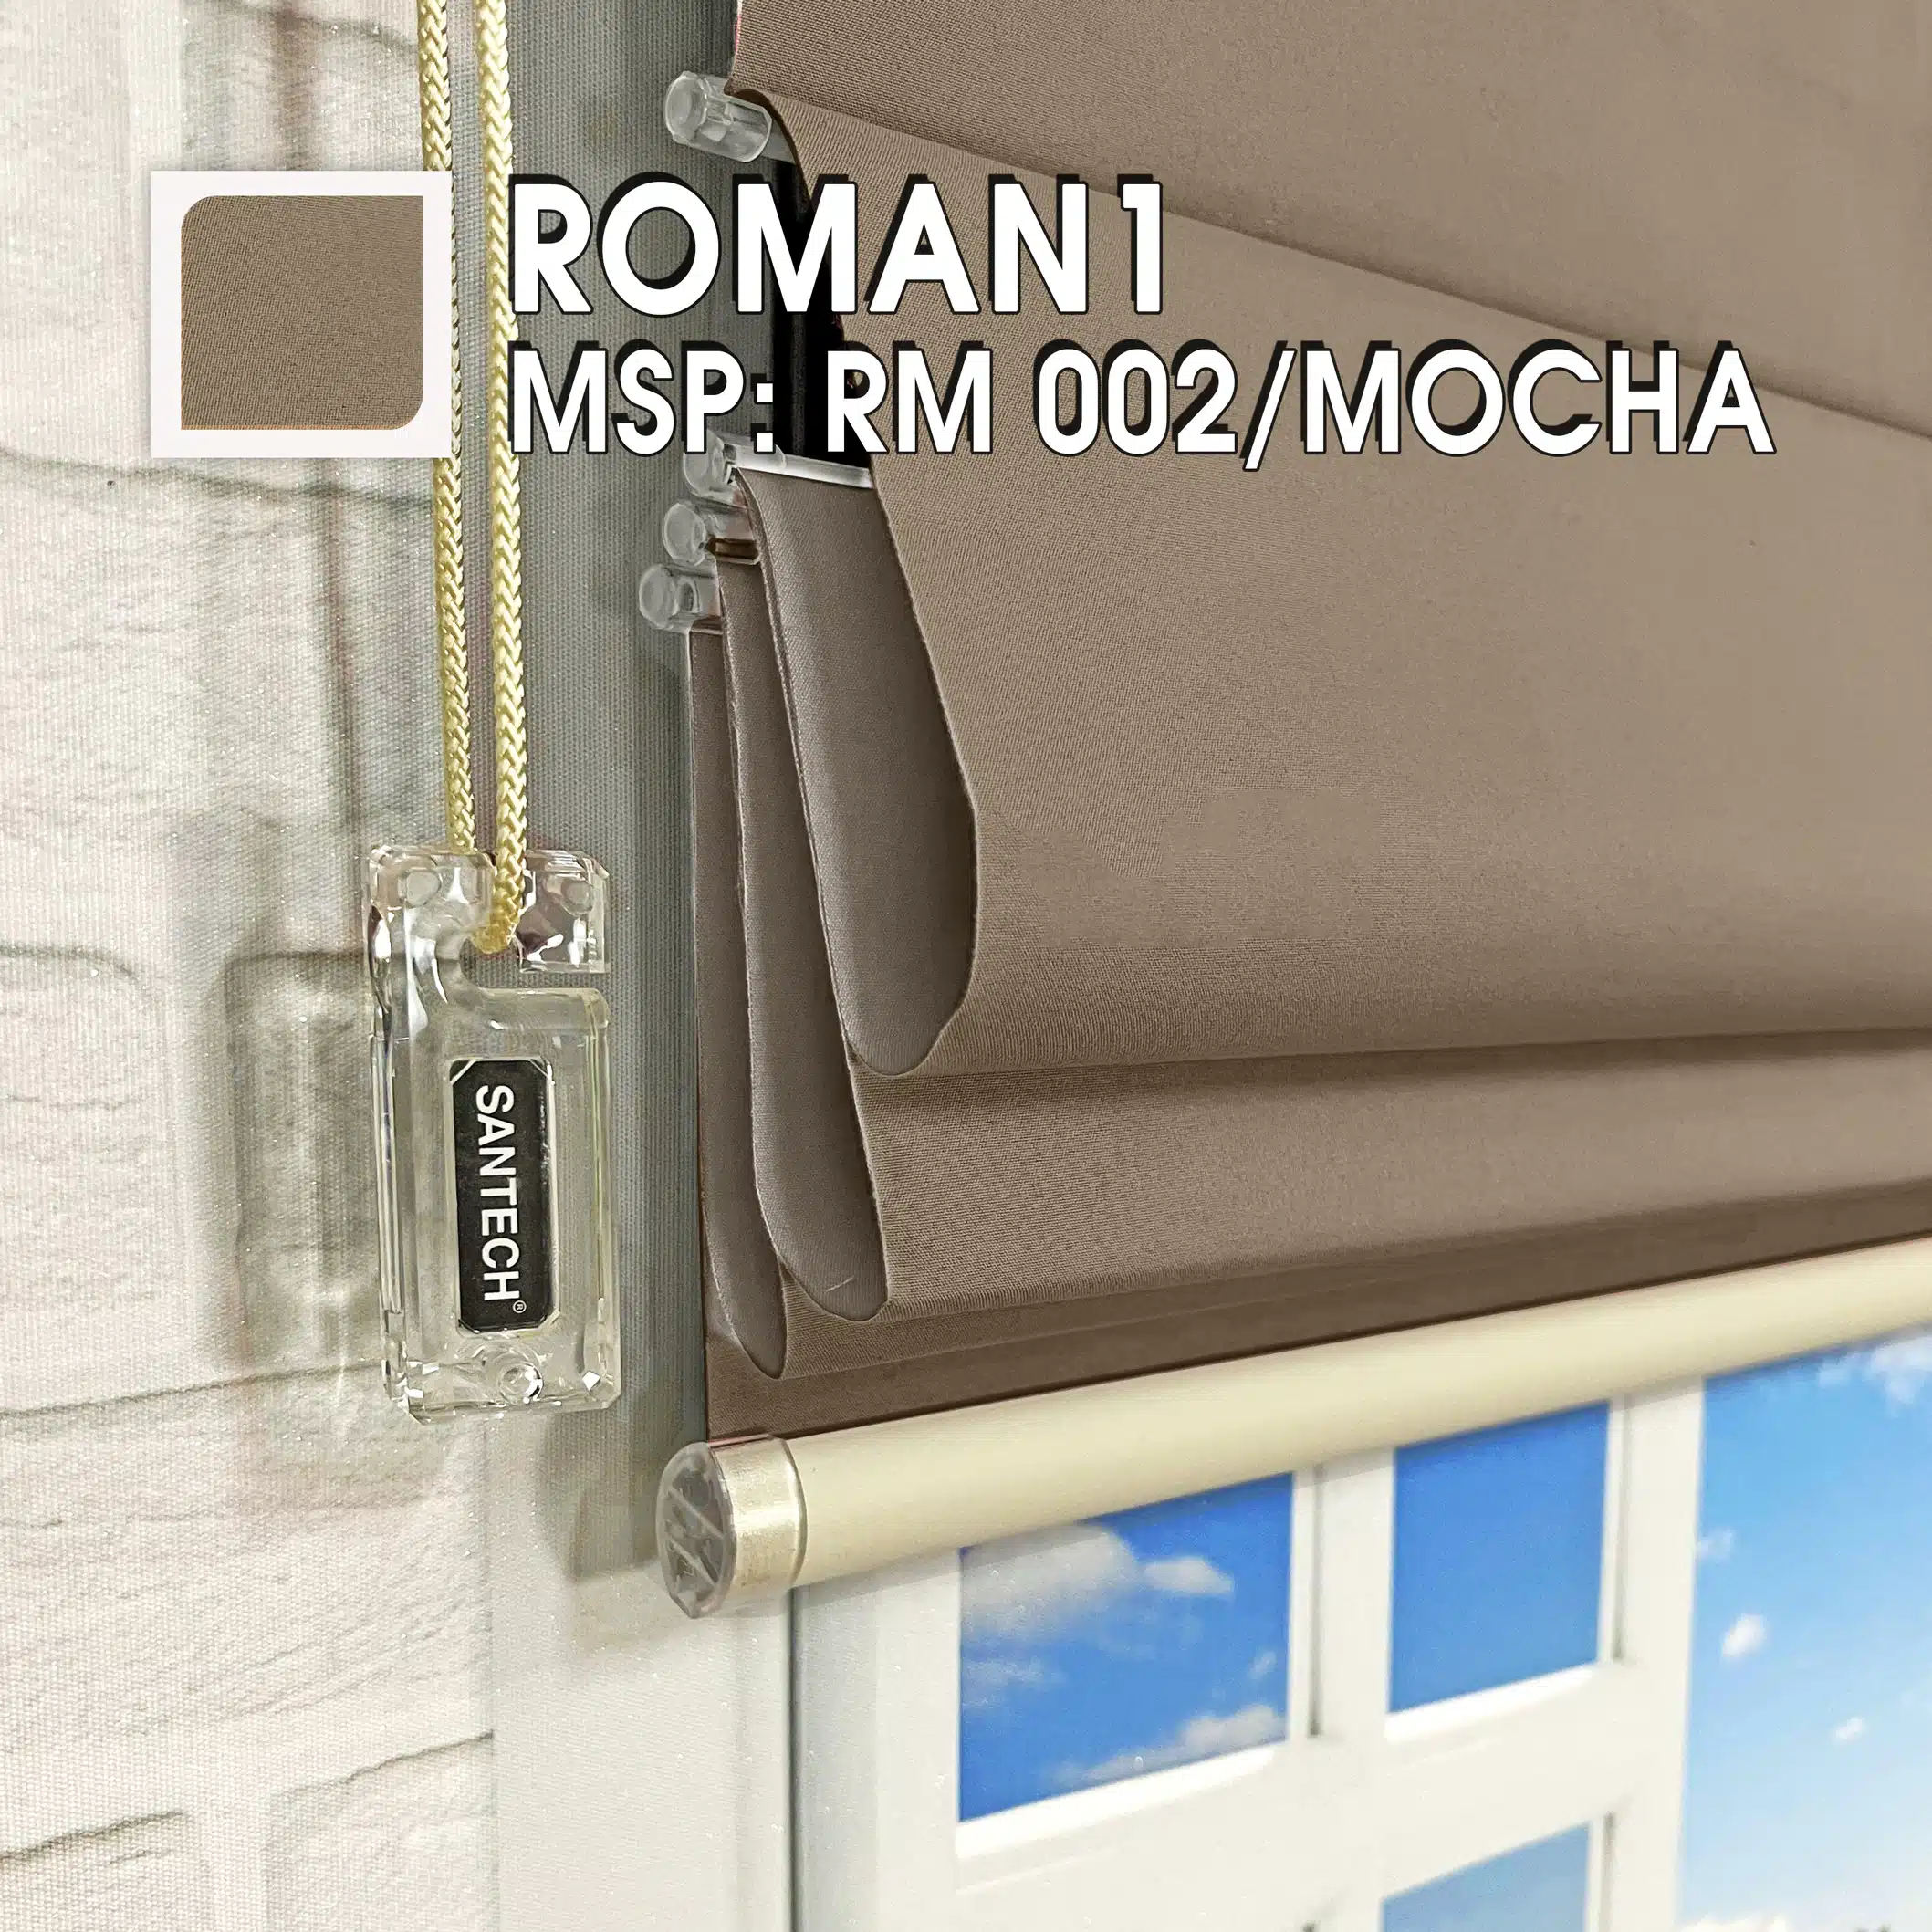 Roman1 Rm 002 